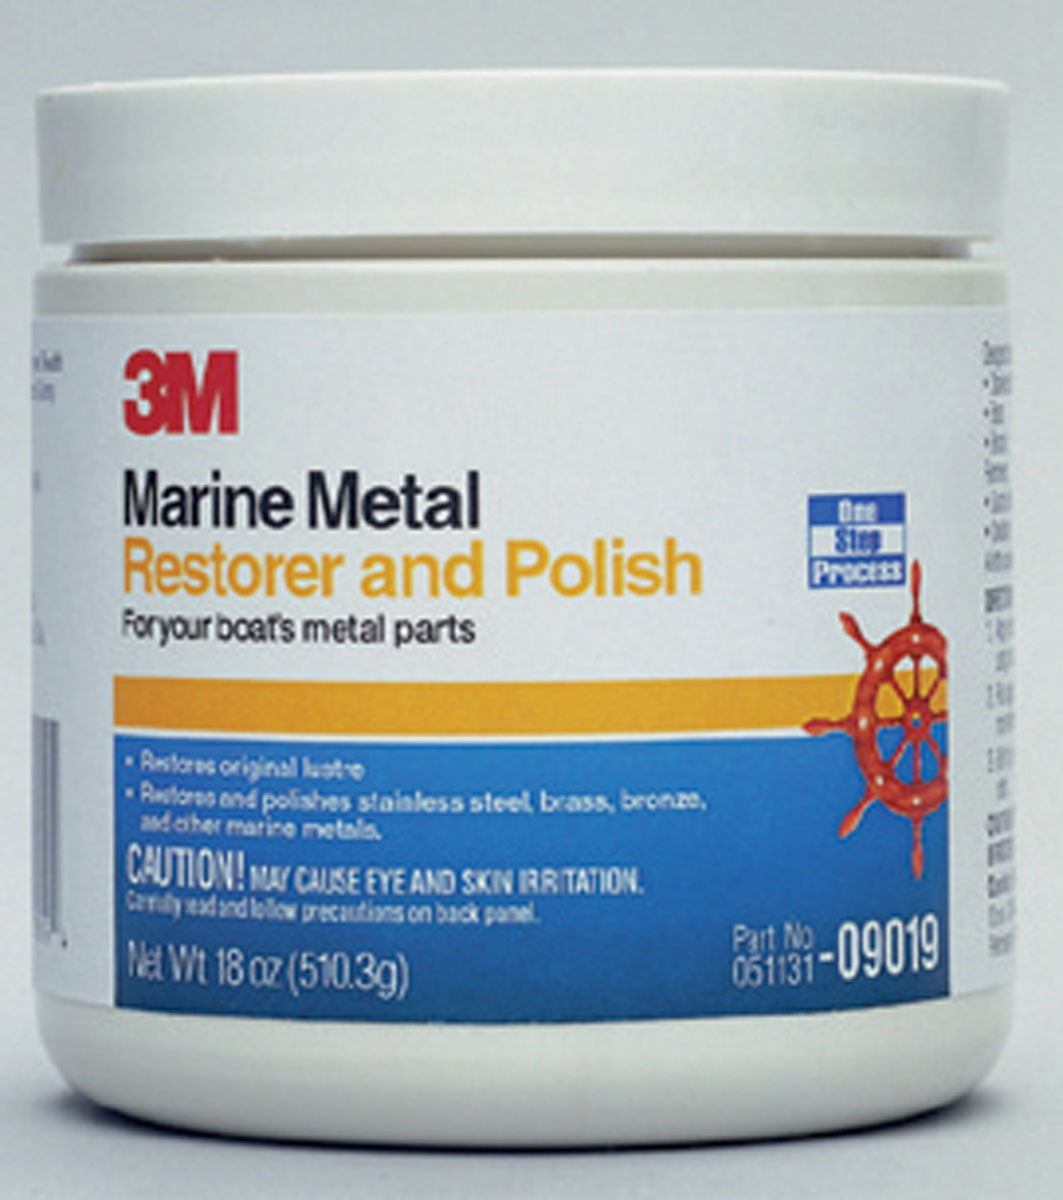 3M Marine Metal Restorer and Polish